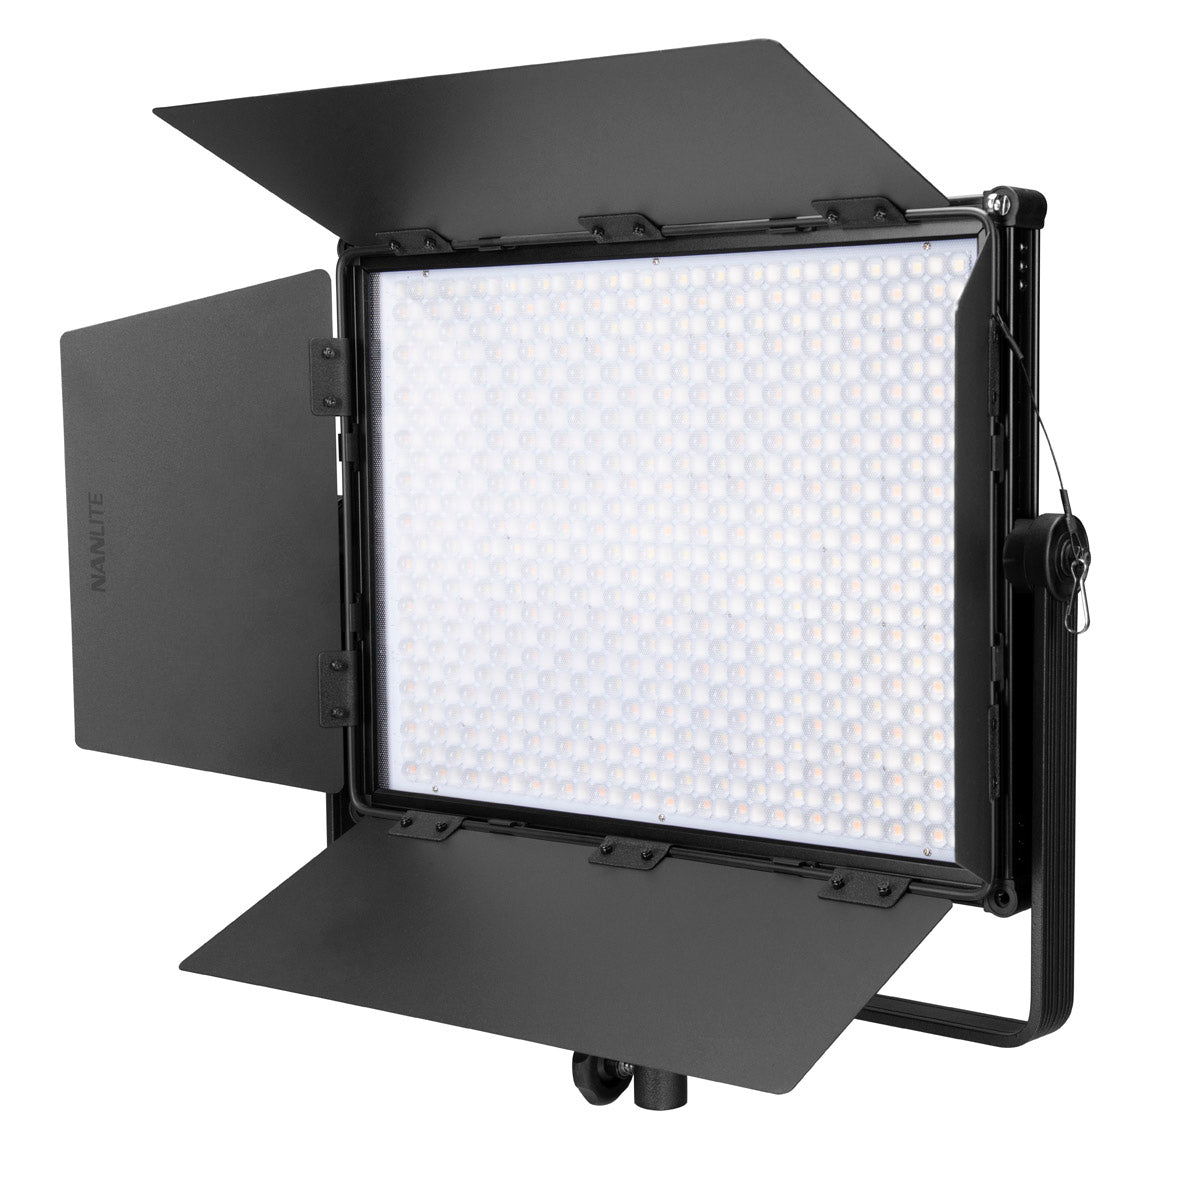 NANLITE MixPanel 150 撮影用ライト 定常光ライト 撮影照明 パネルライト RGBライト 動画撮影 スタジオライト ライブ配信  映像制作 LEDライト 12ヶ月保証 国内正規品